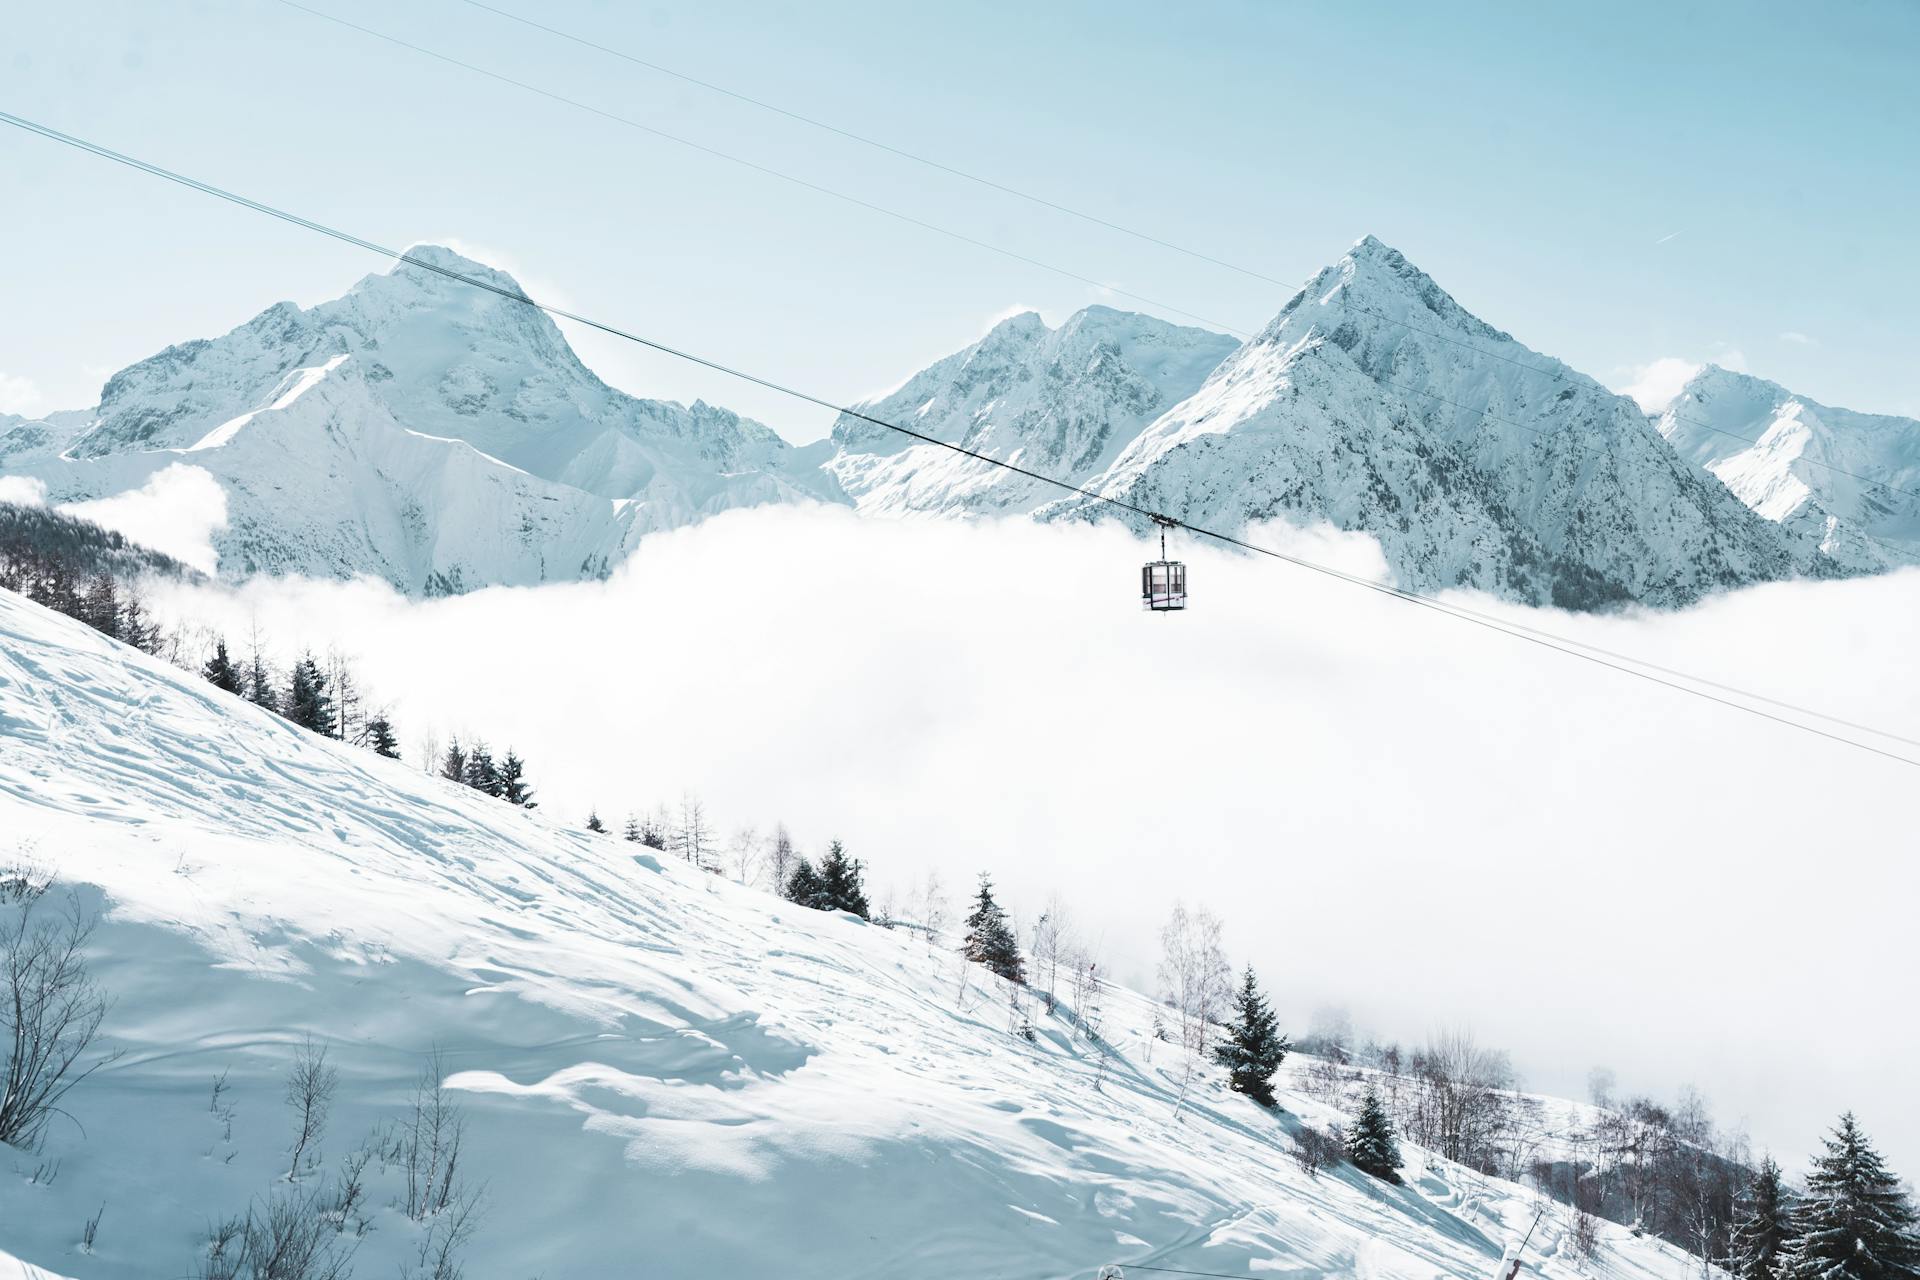 Gondola transporting skiiers to top of Les Deux Alpes ski resort in winter